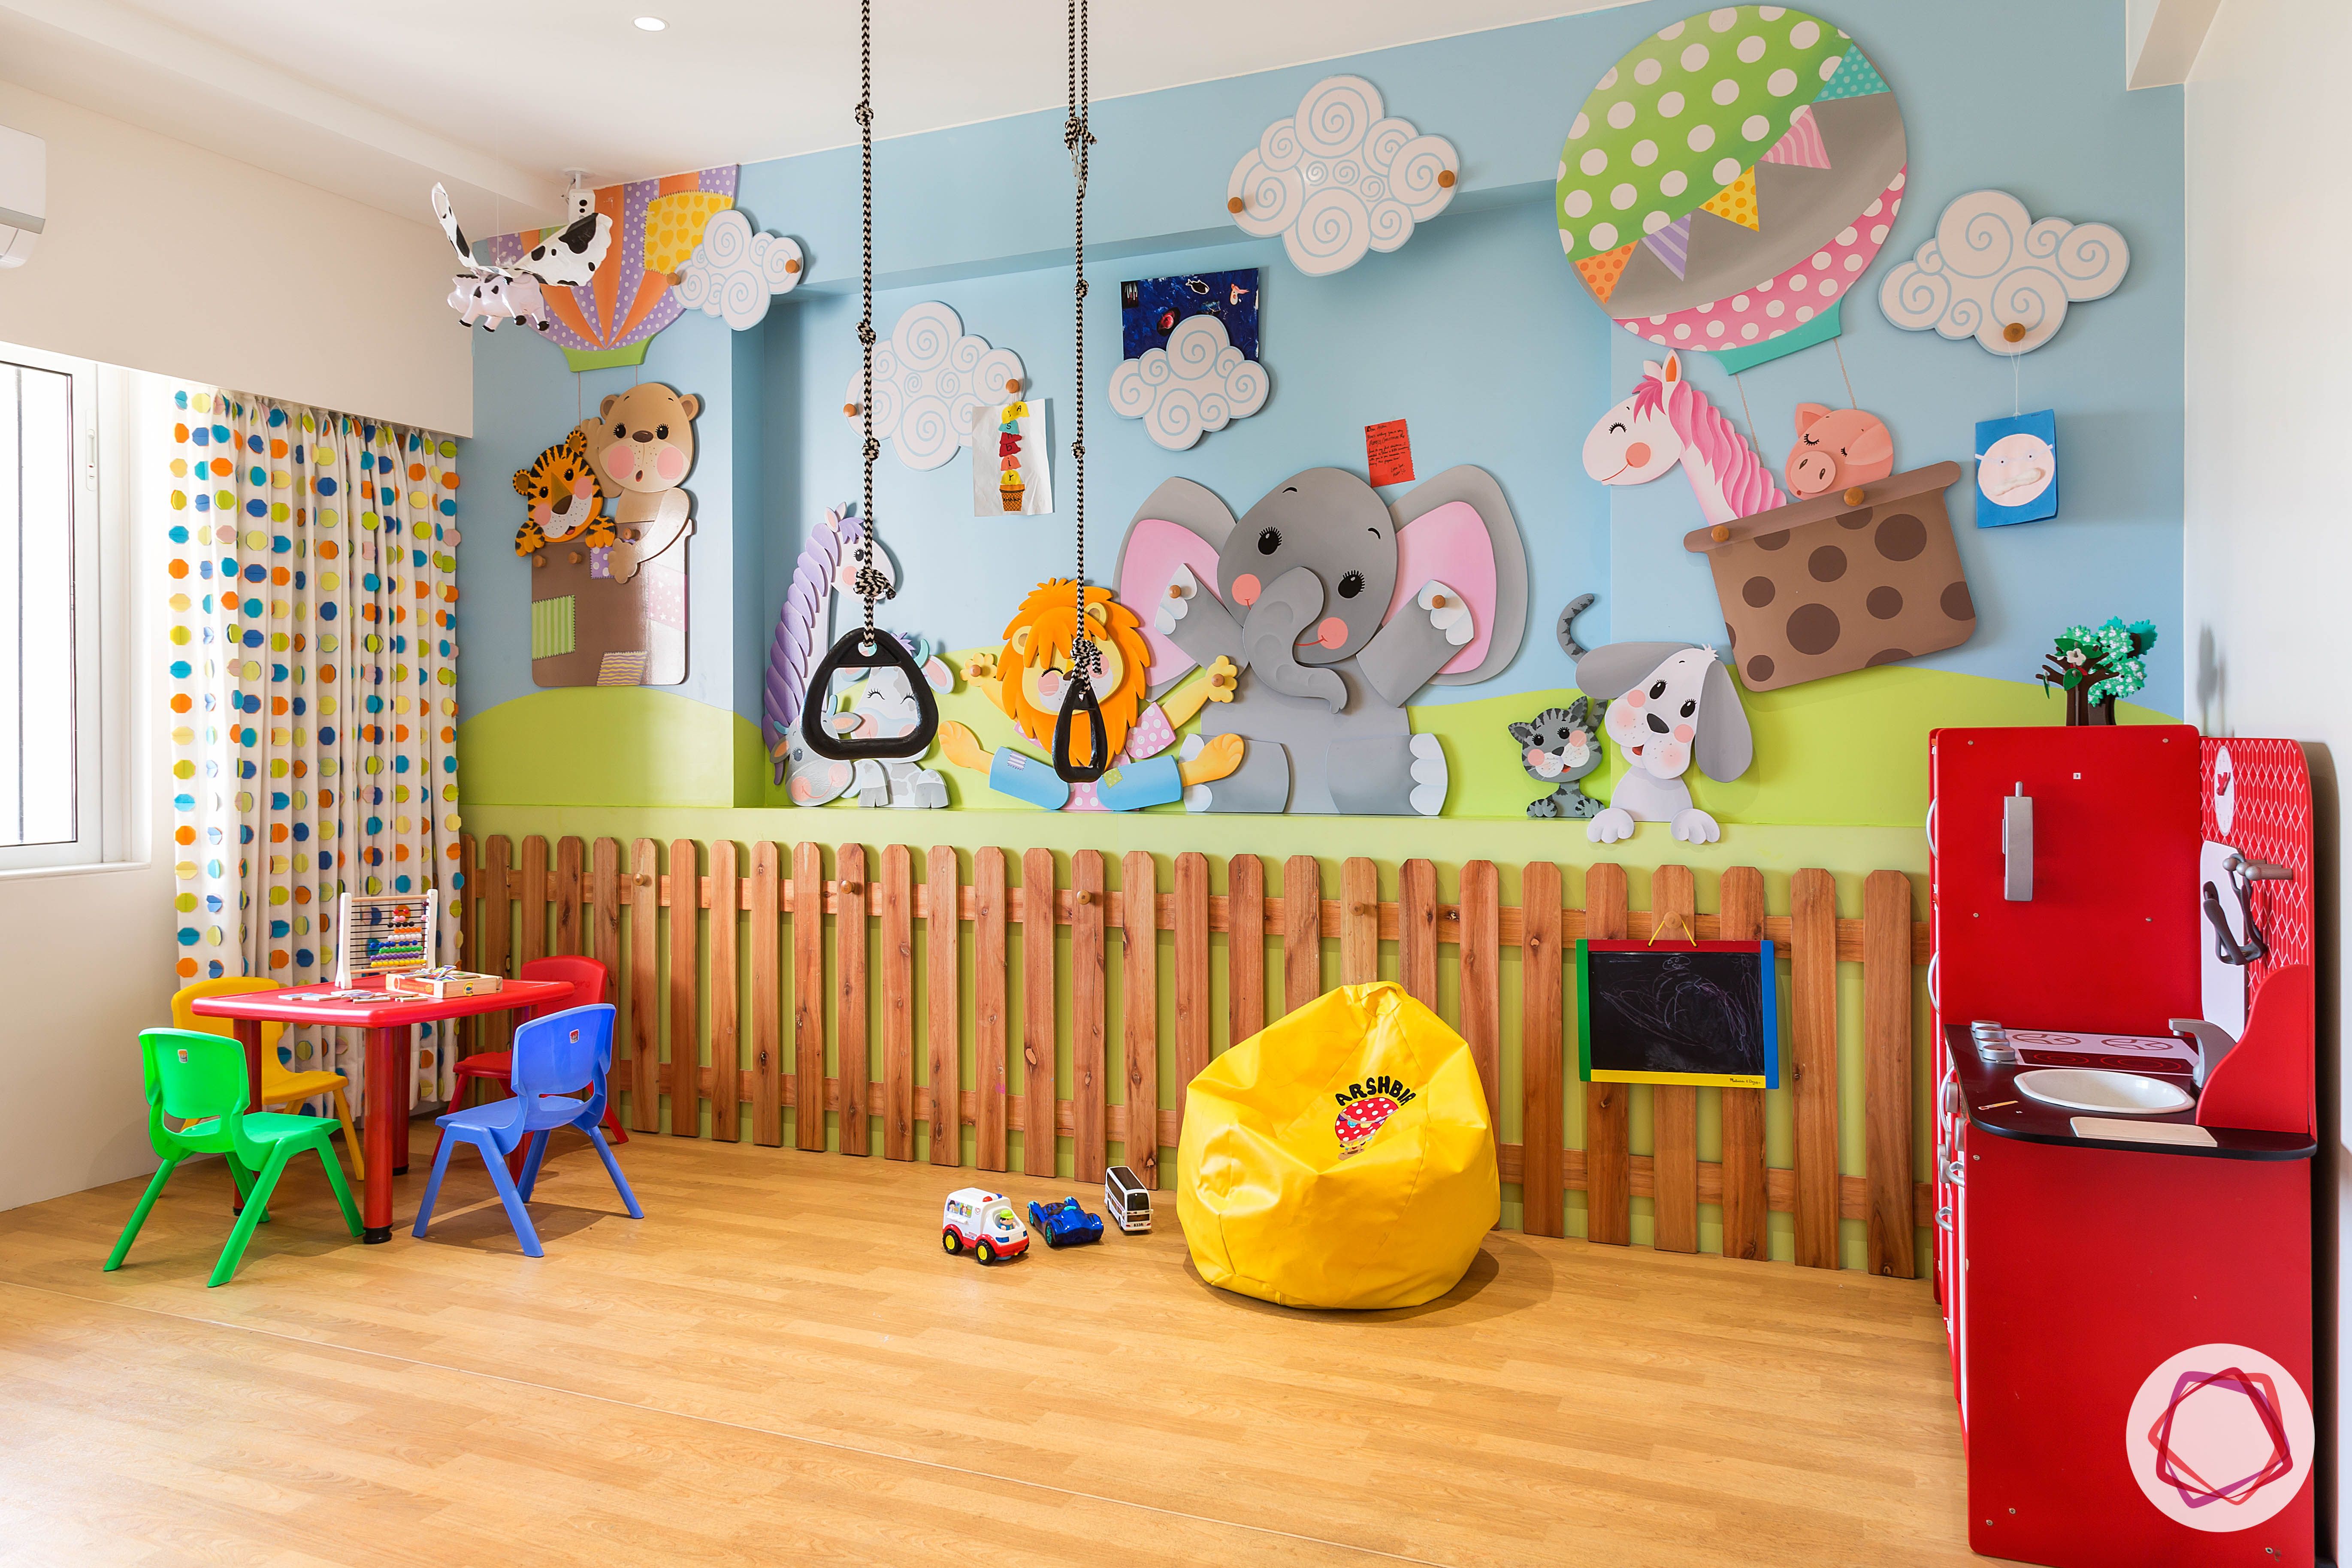 4bhk house plan-kids playroom ideas-kids playroom furniture-kids playroom designs-kids nursery designs